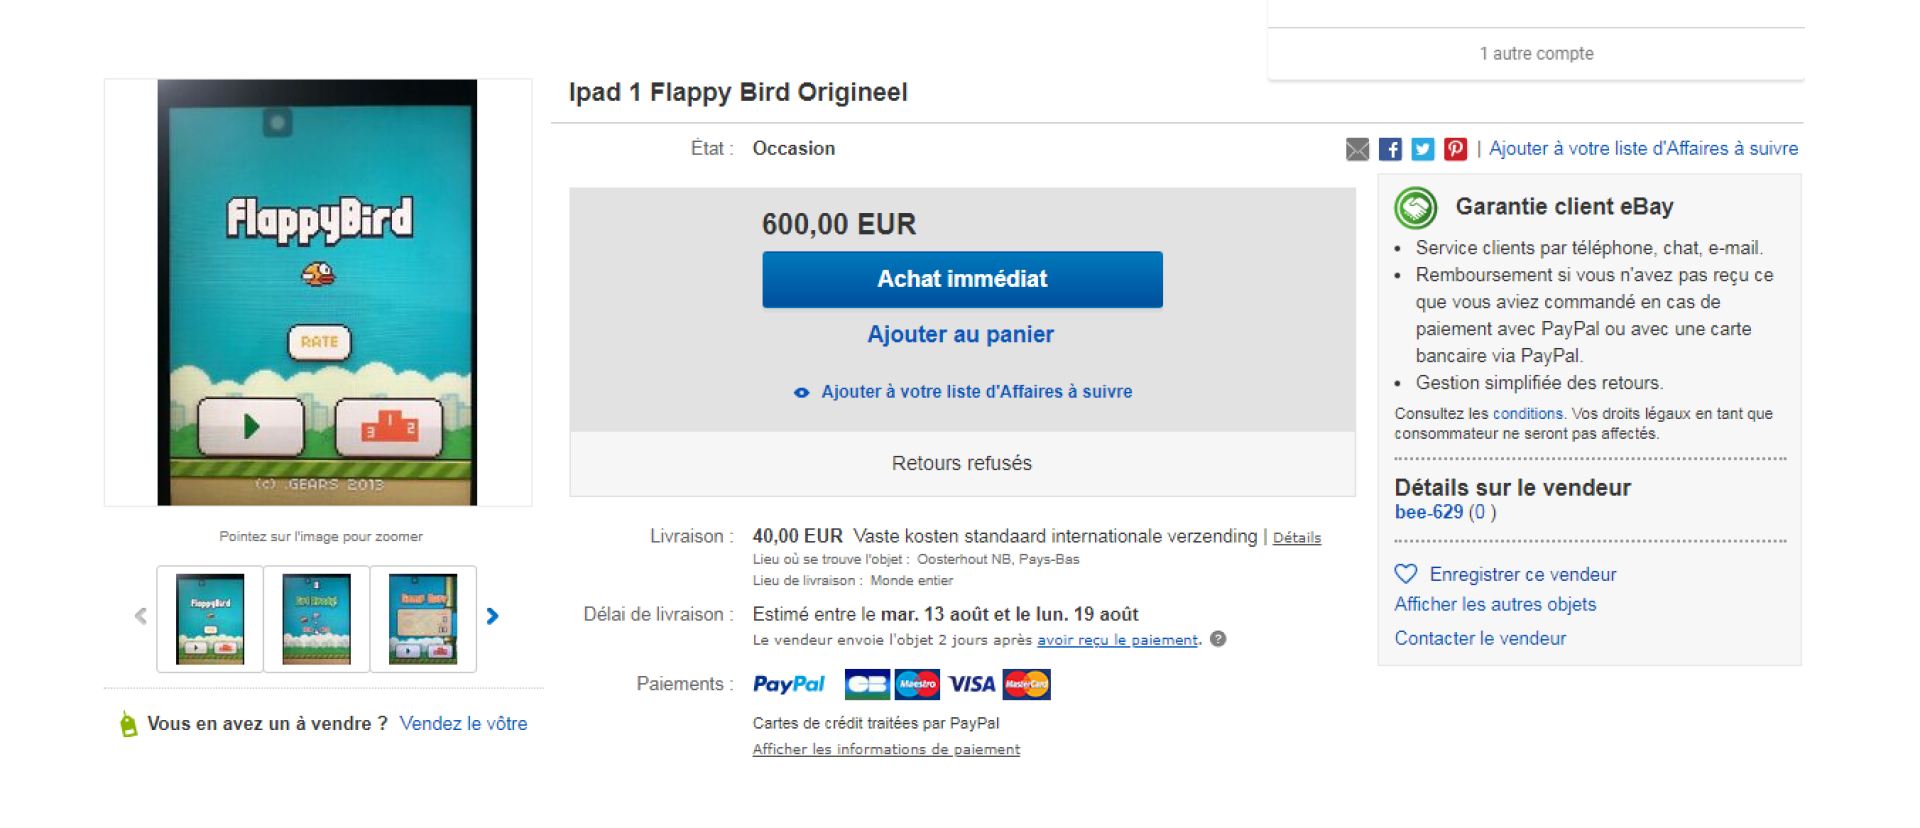 600 euros l’iPad avec « Flappy Bird » installé dessus, pas cher, pas cher.